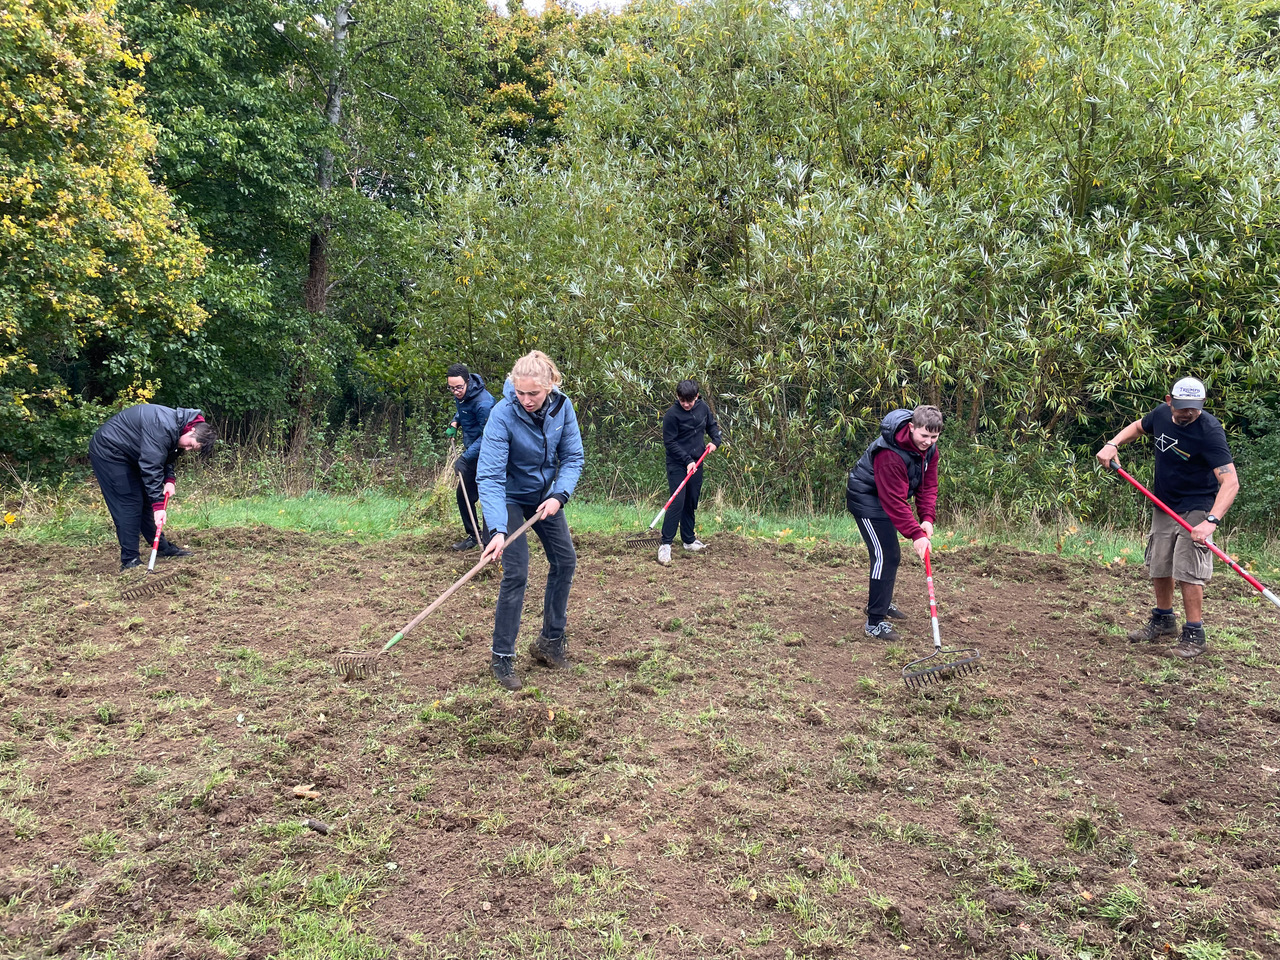 Bartholomew students raking Eynsham Primary School's meadow before seeding